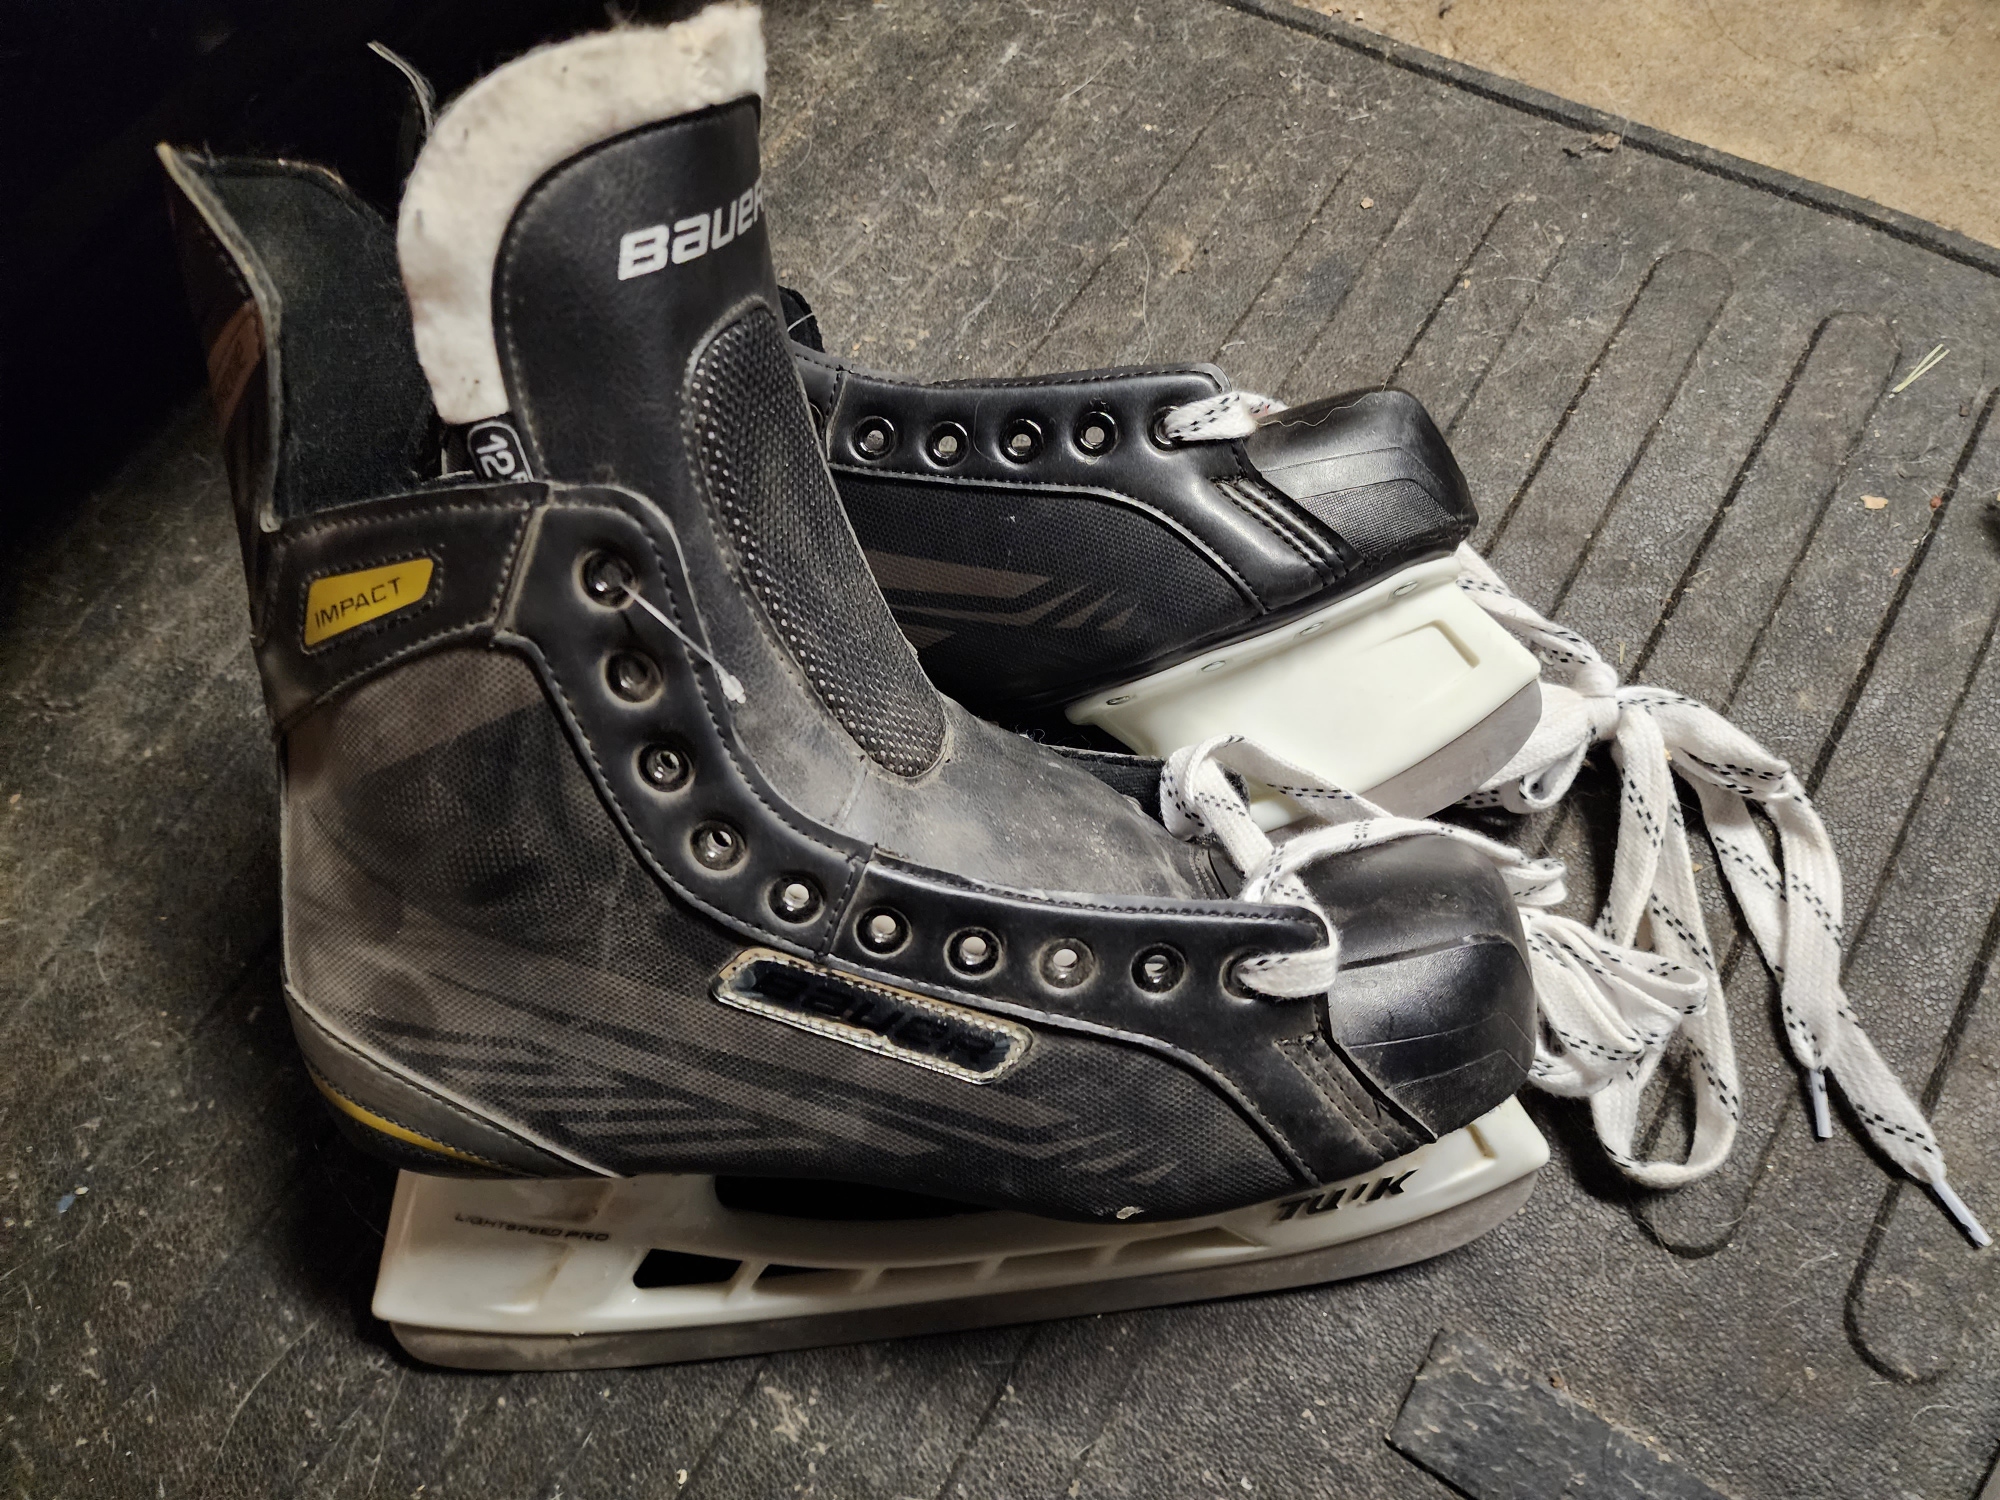 Senior Used Bauer Impact Hockey Skates Regular Width Size 12